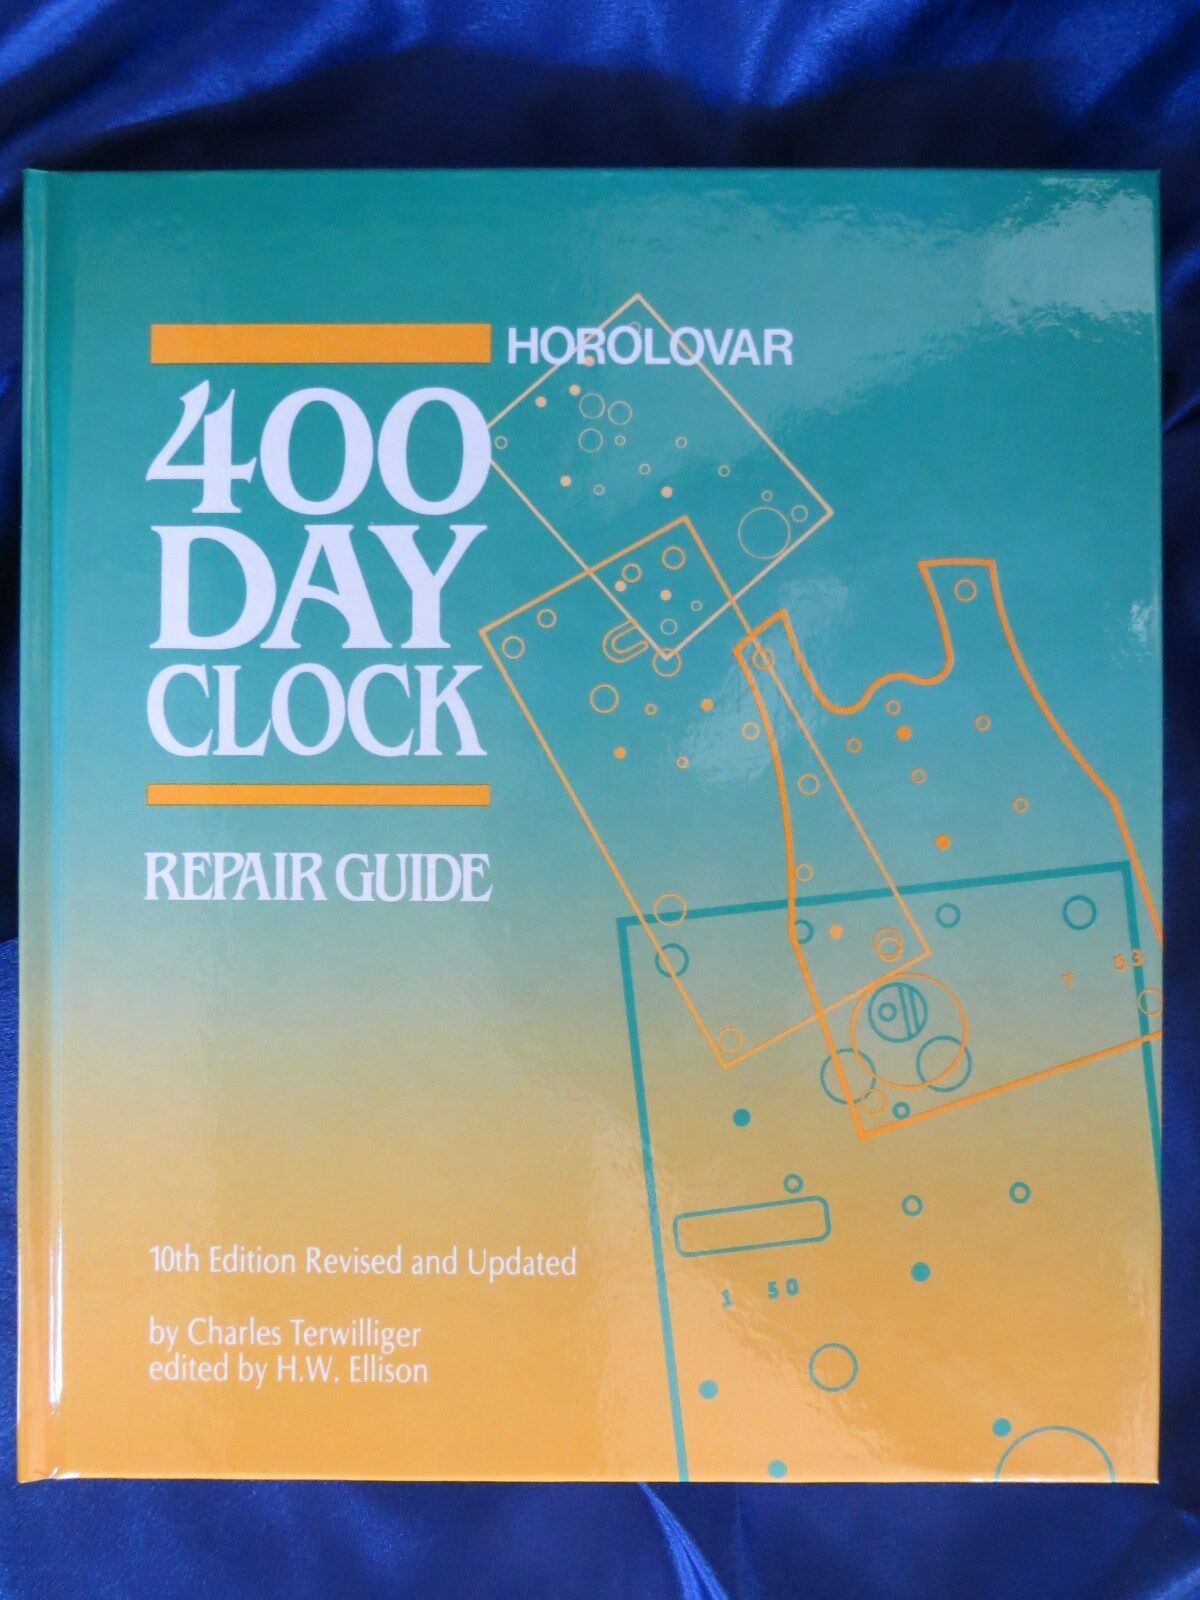 Horolovar 400 Day Anniversary Clock Repair Guide Book - 10th Edition